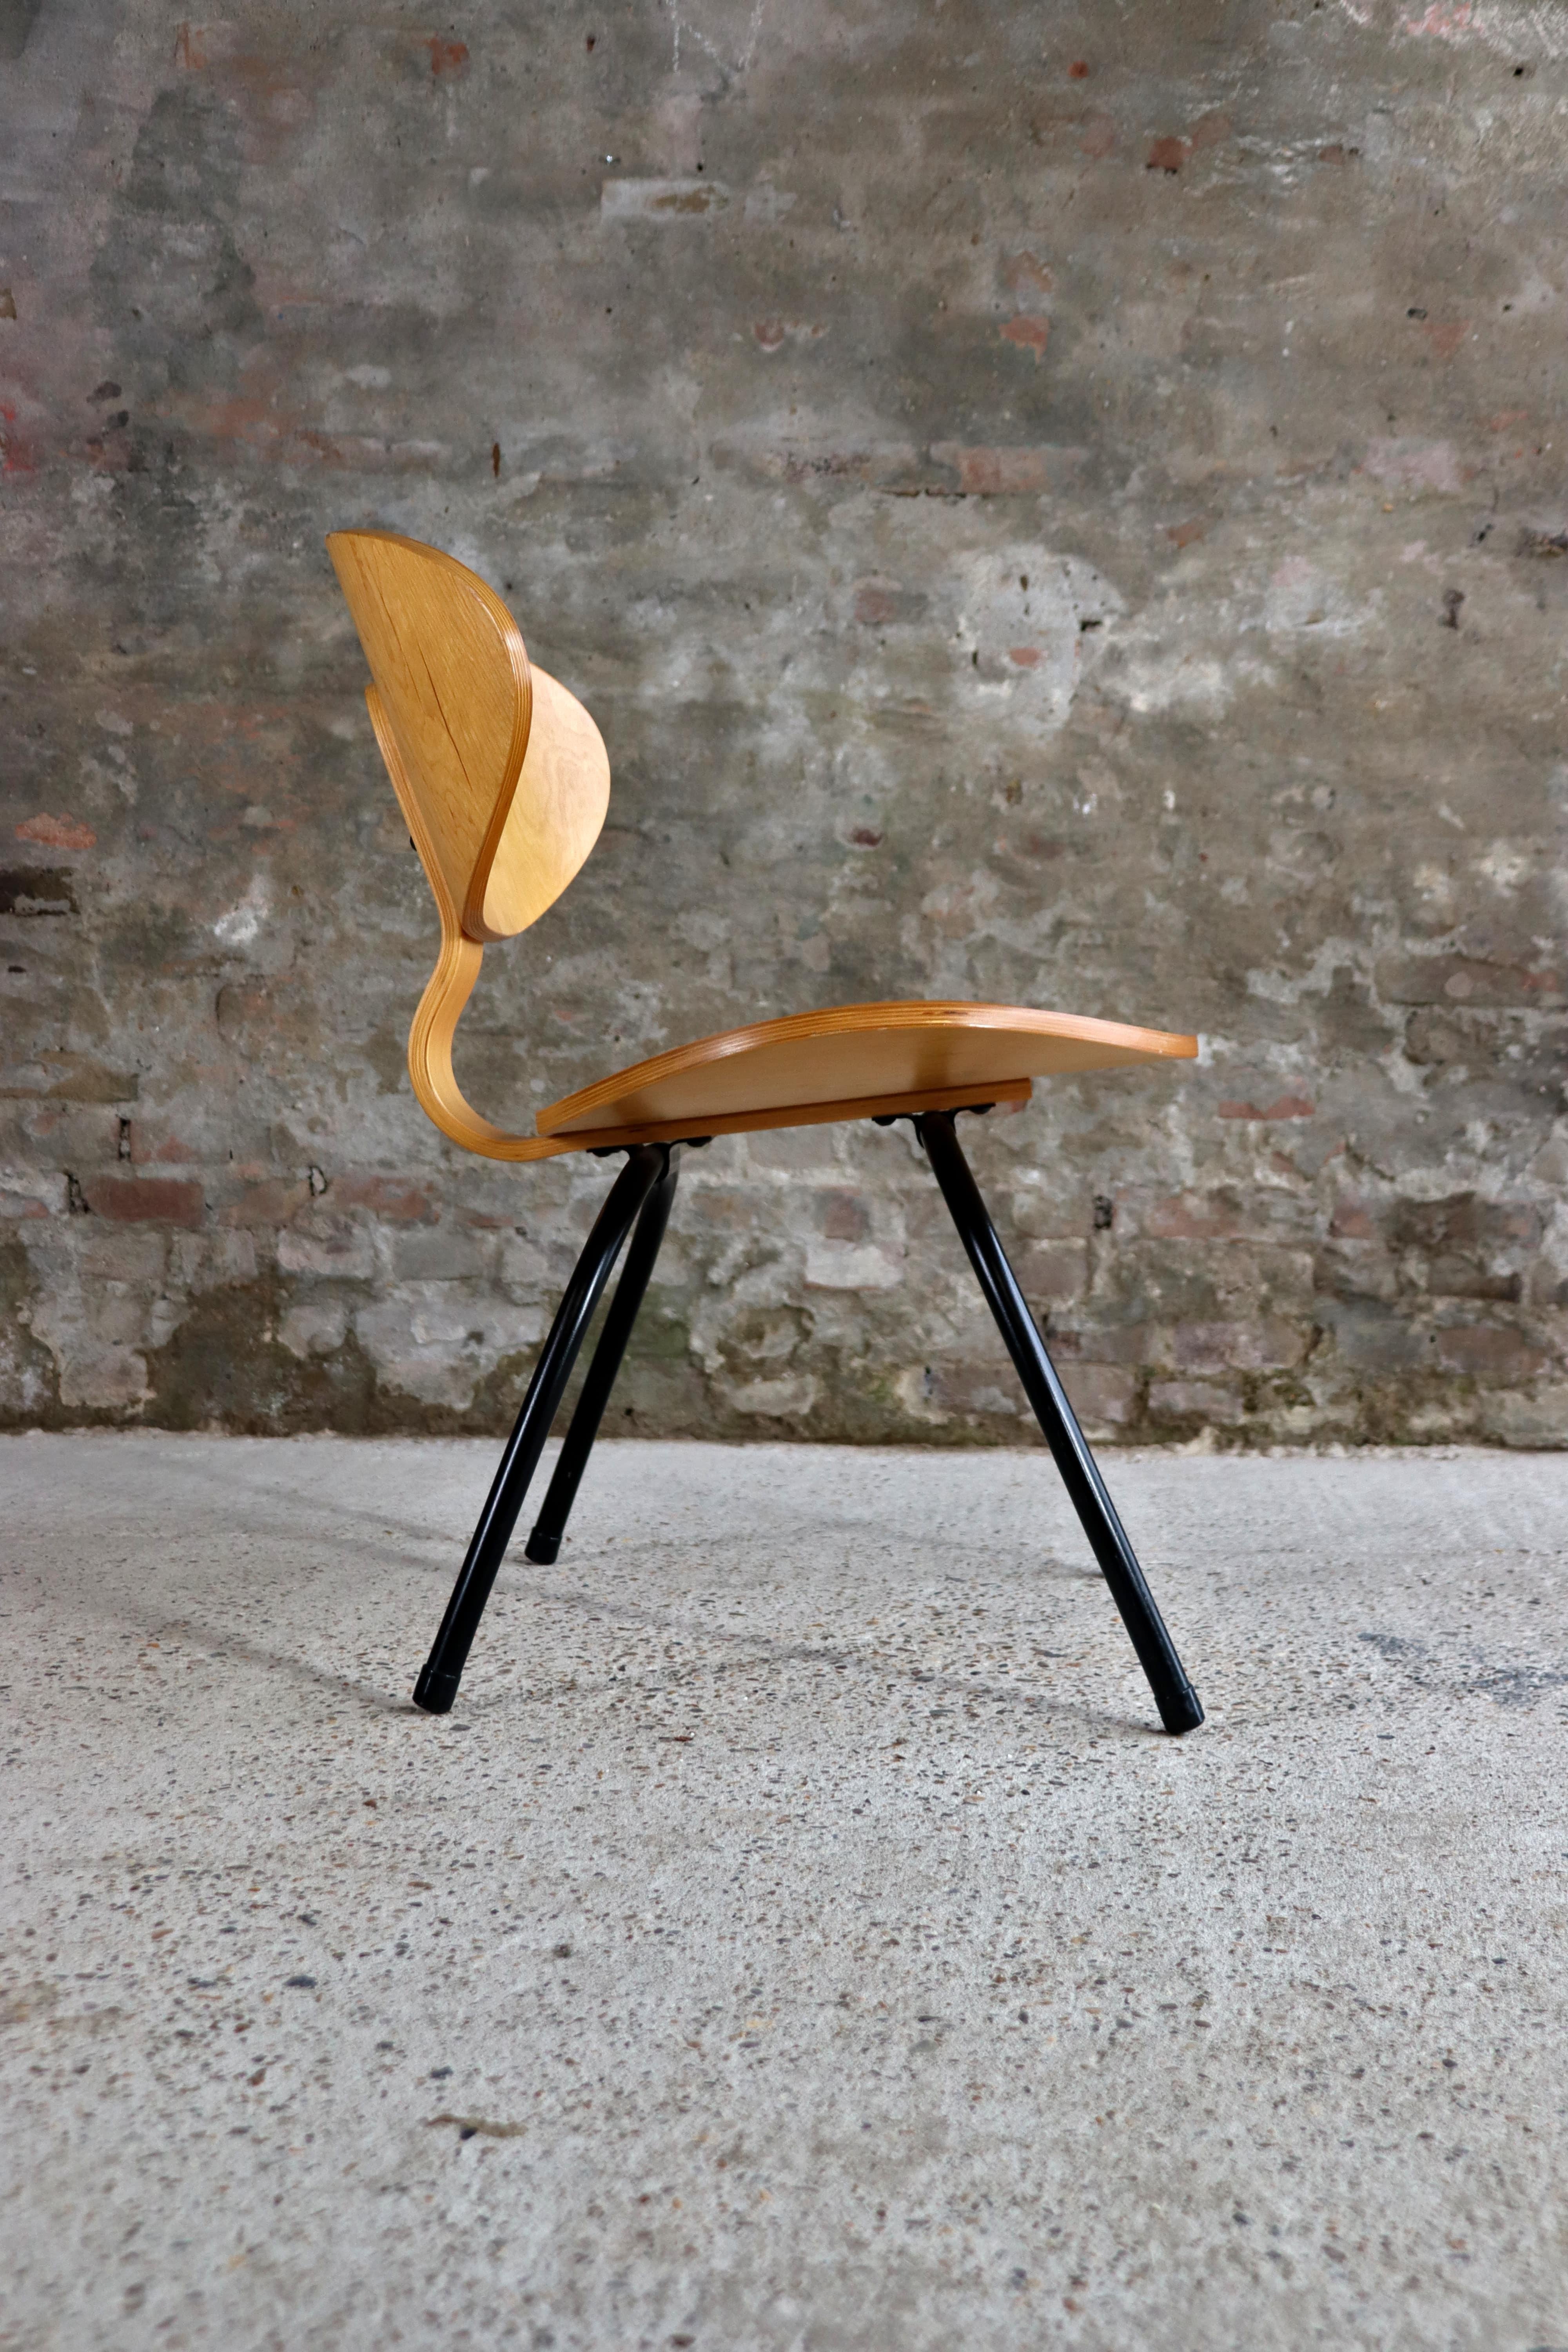 IKEA - Sessel aus Sperrholz - Inspiriert von Charles & Ray Eames - Nicholai Wiig im Angebot 1